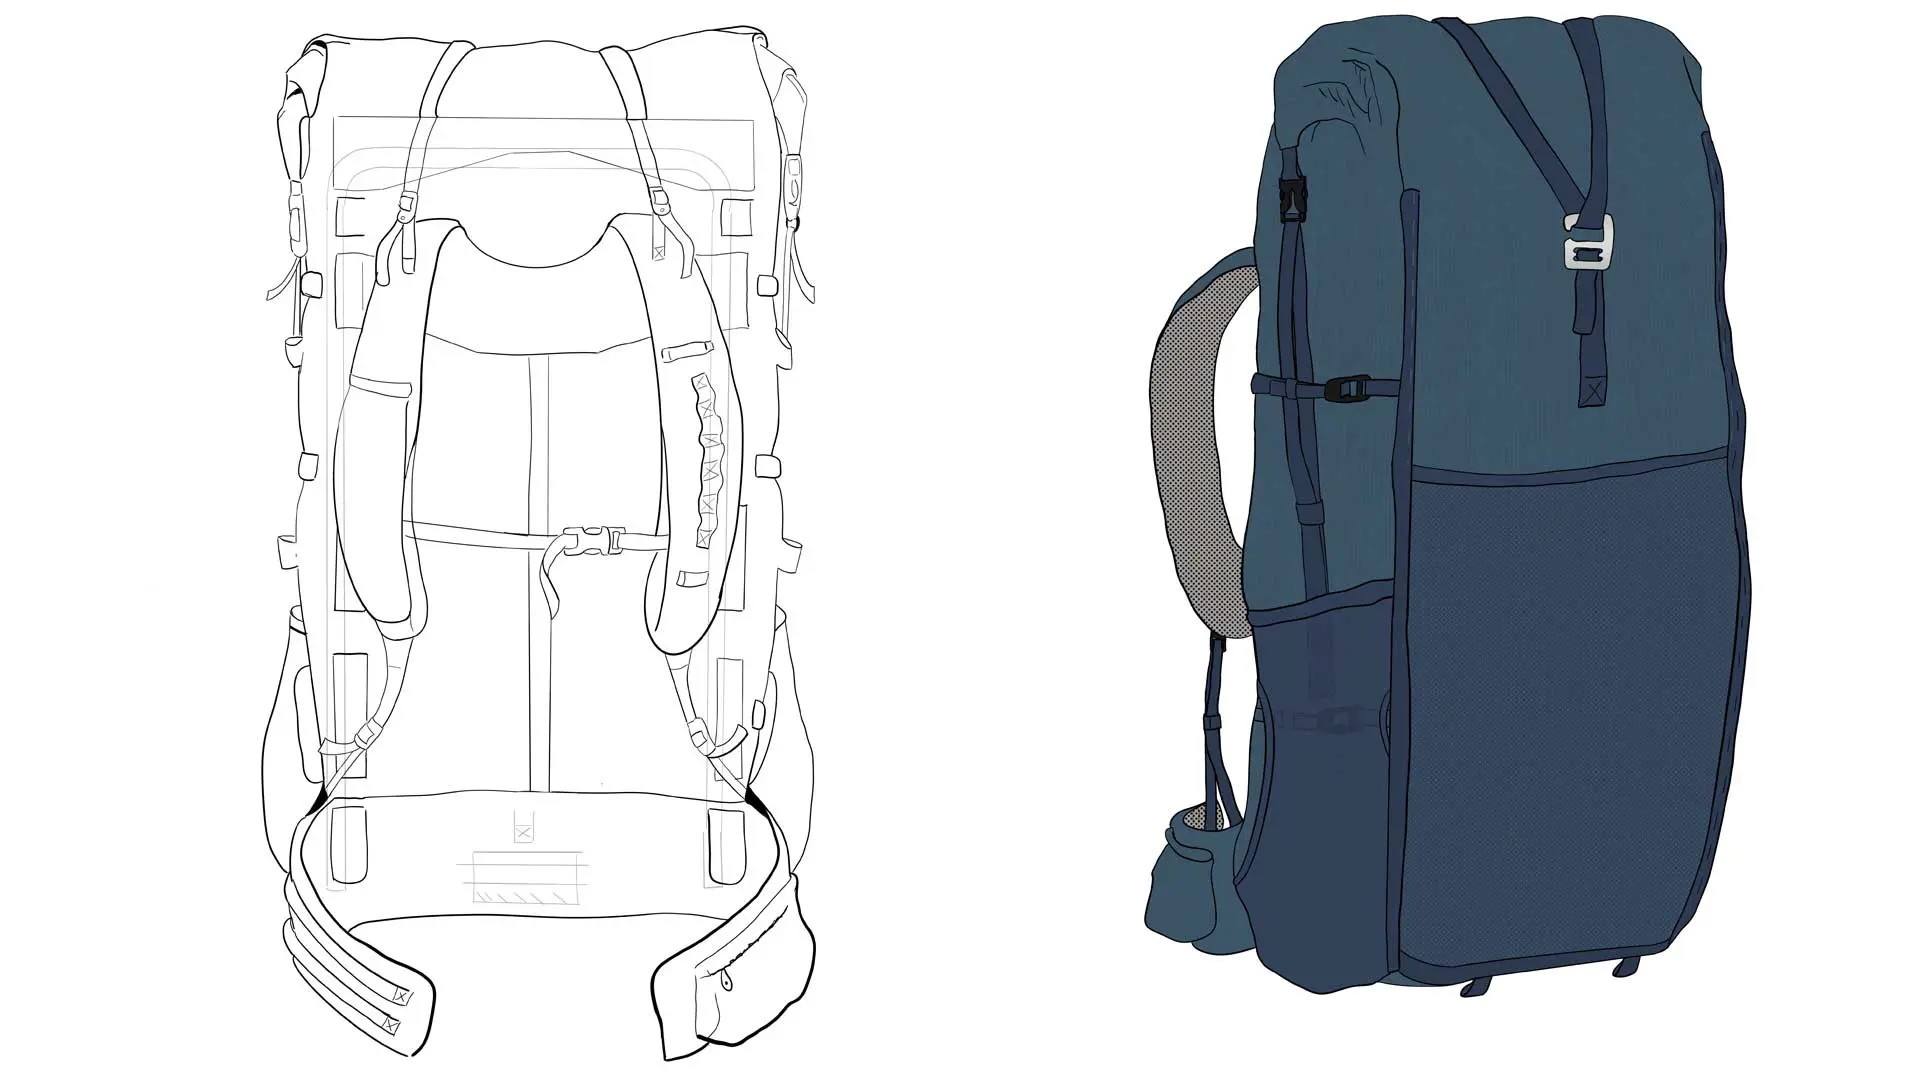 Concept of rucksack